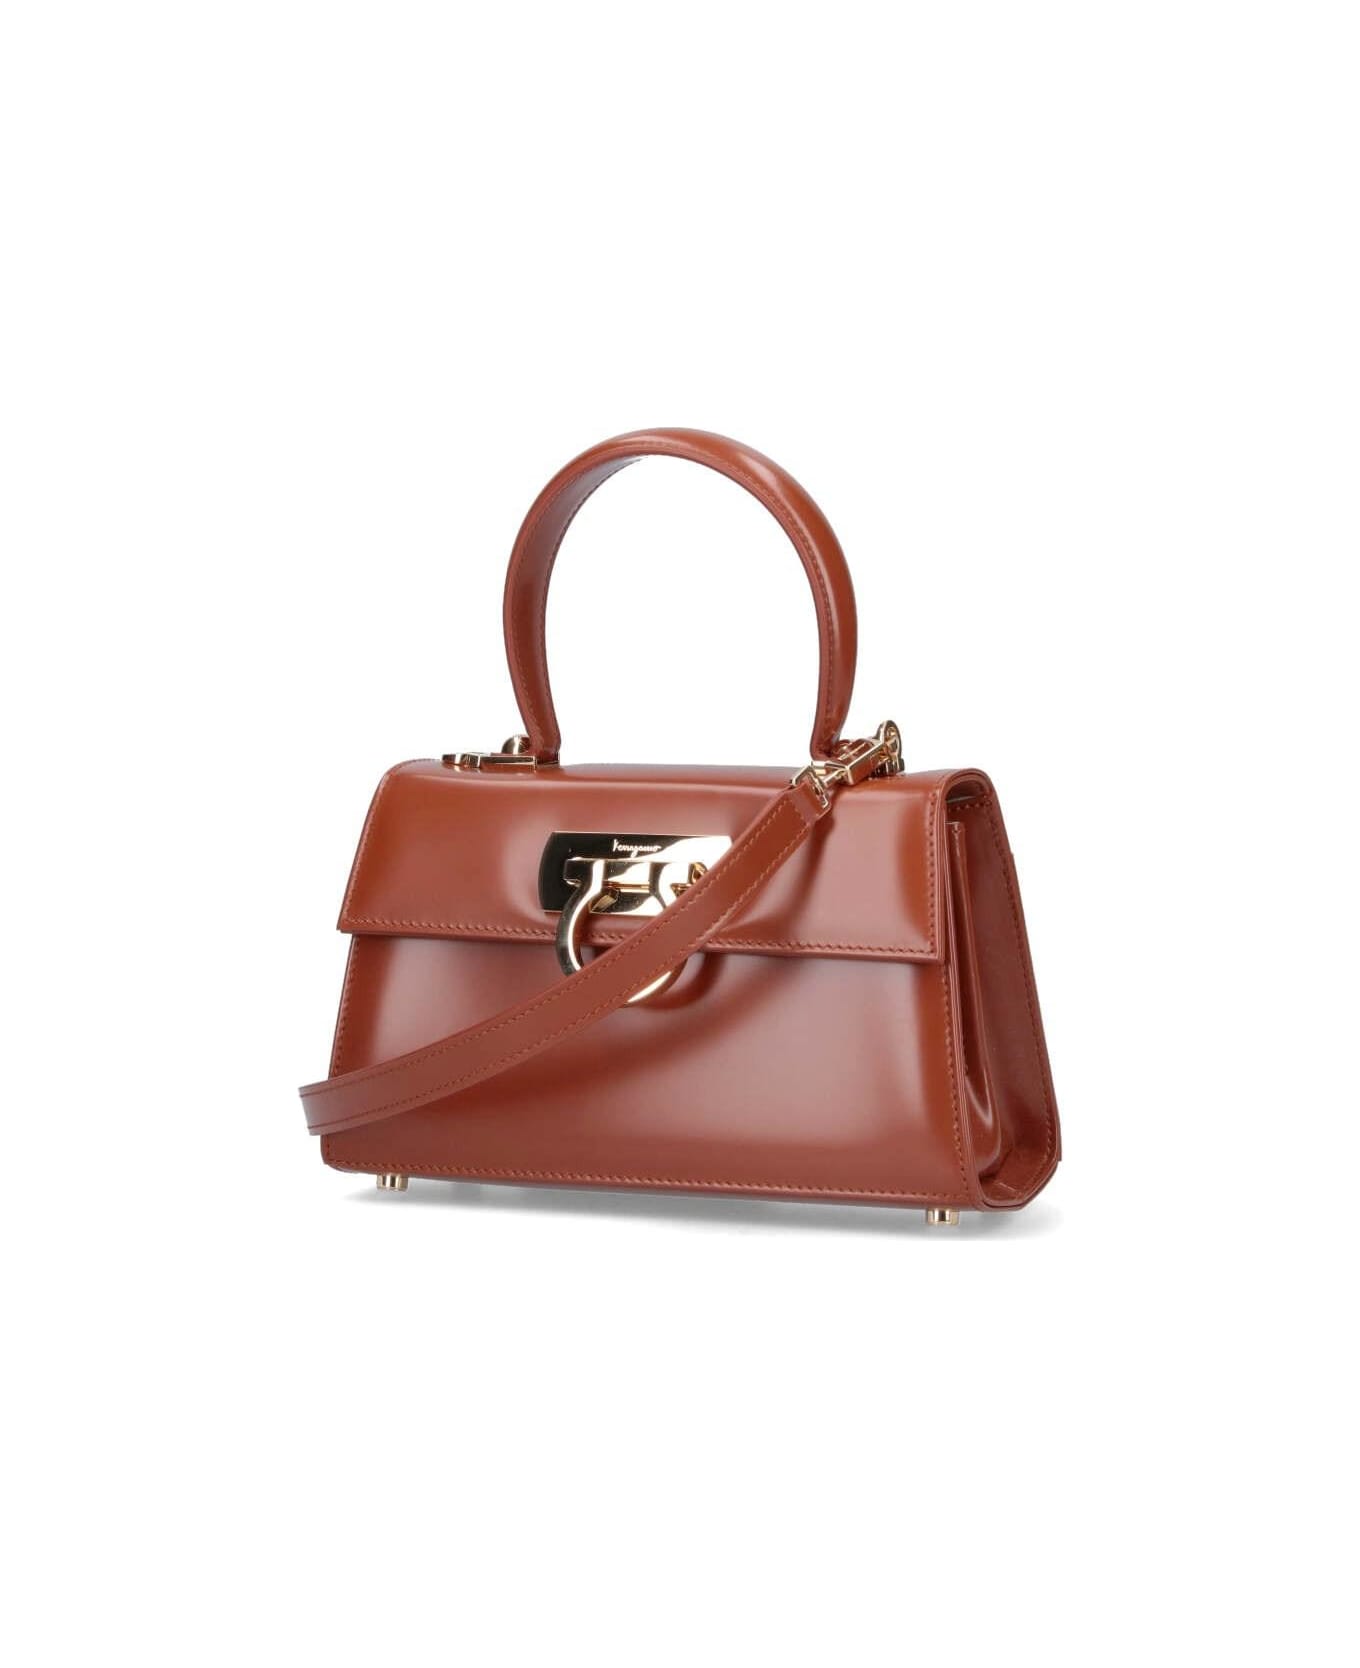 Ferragamo Iconic Handbag - Brown